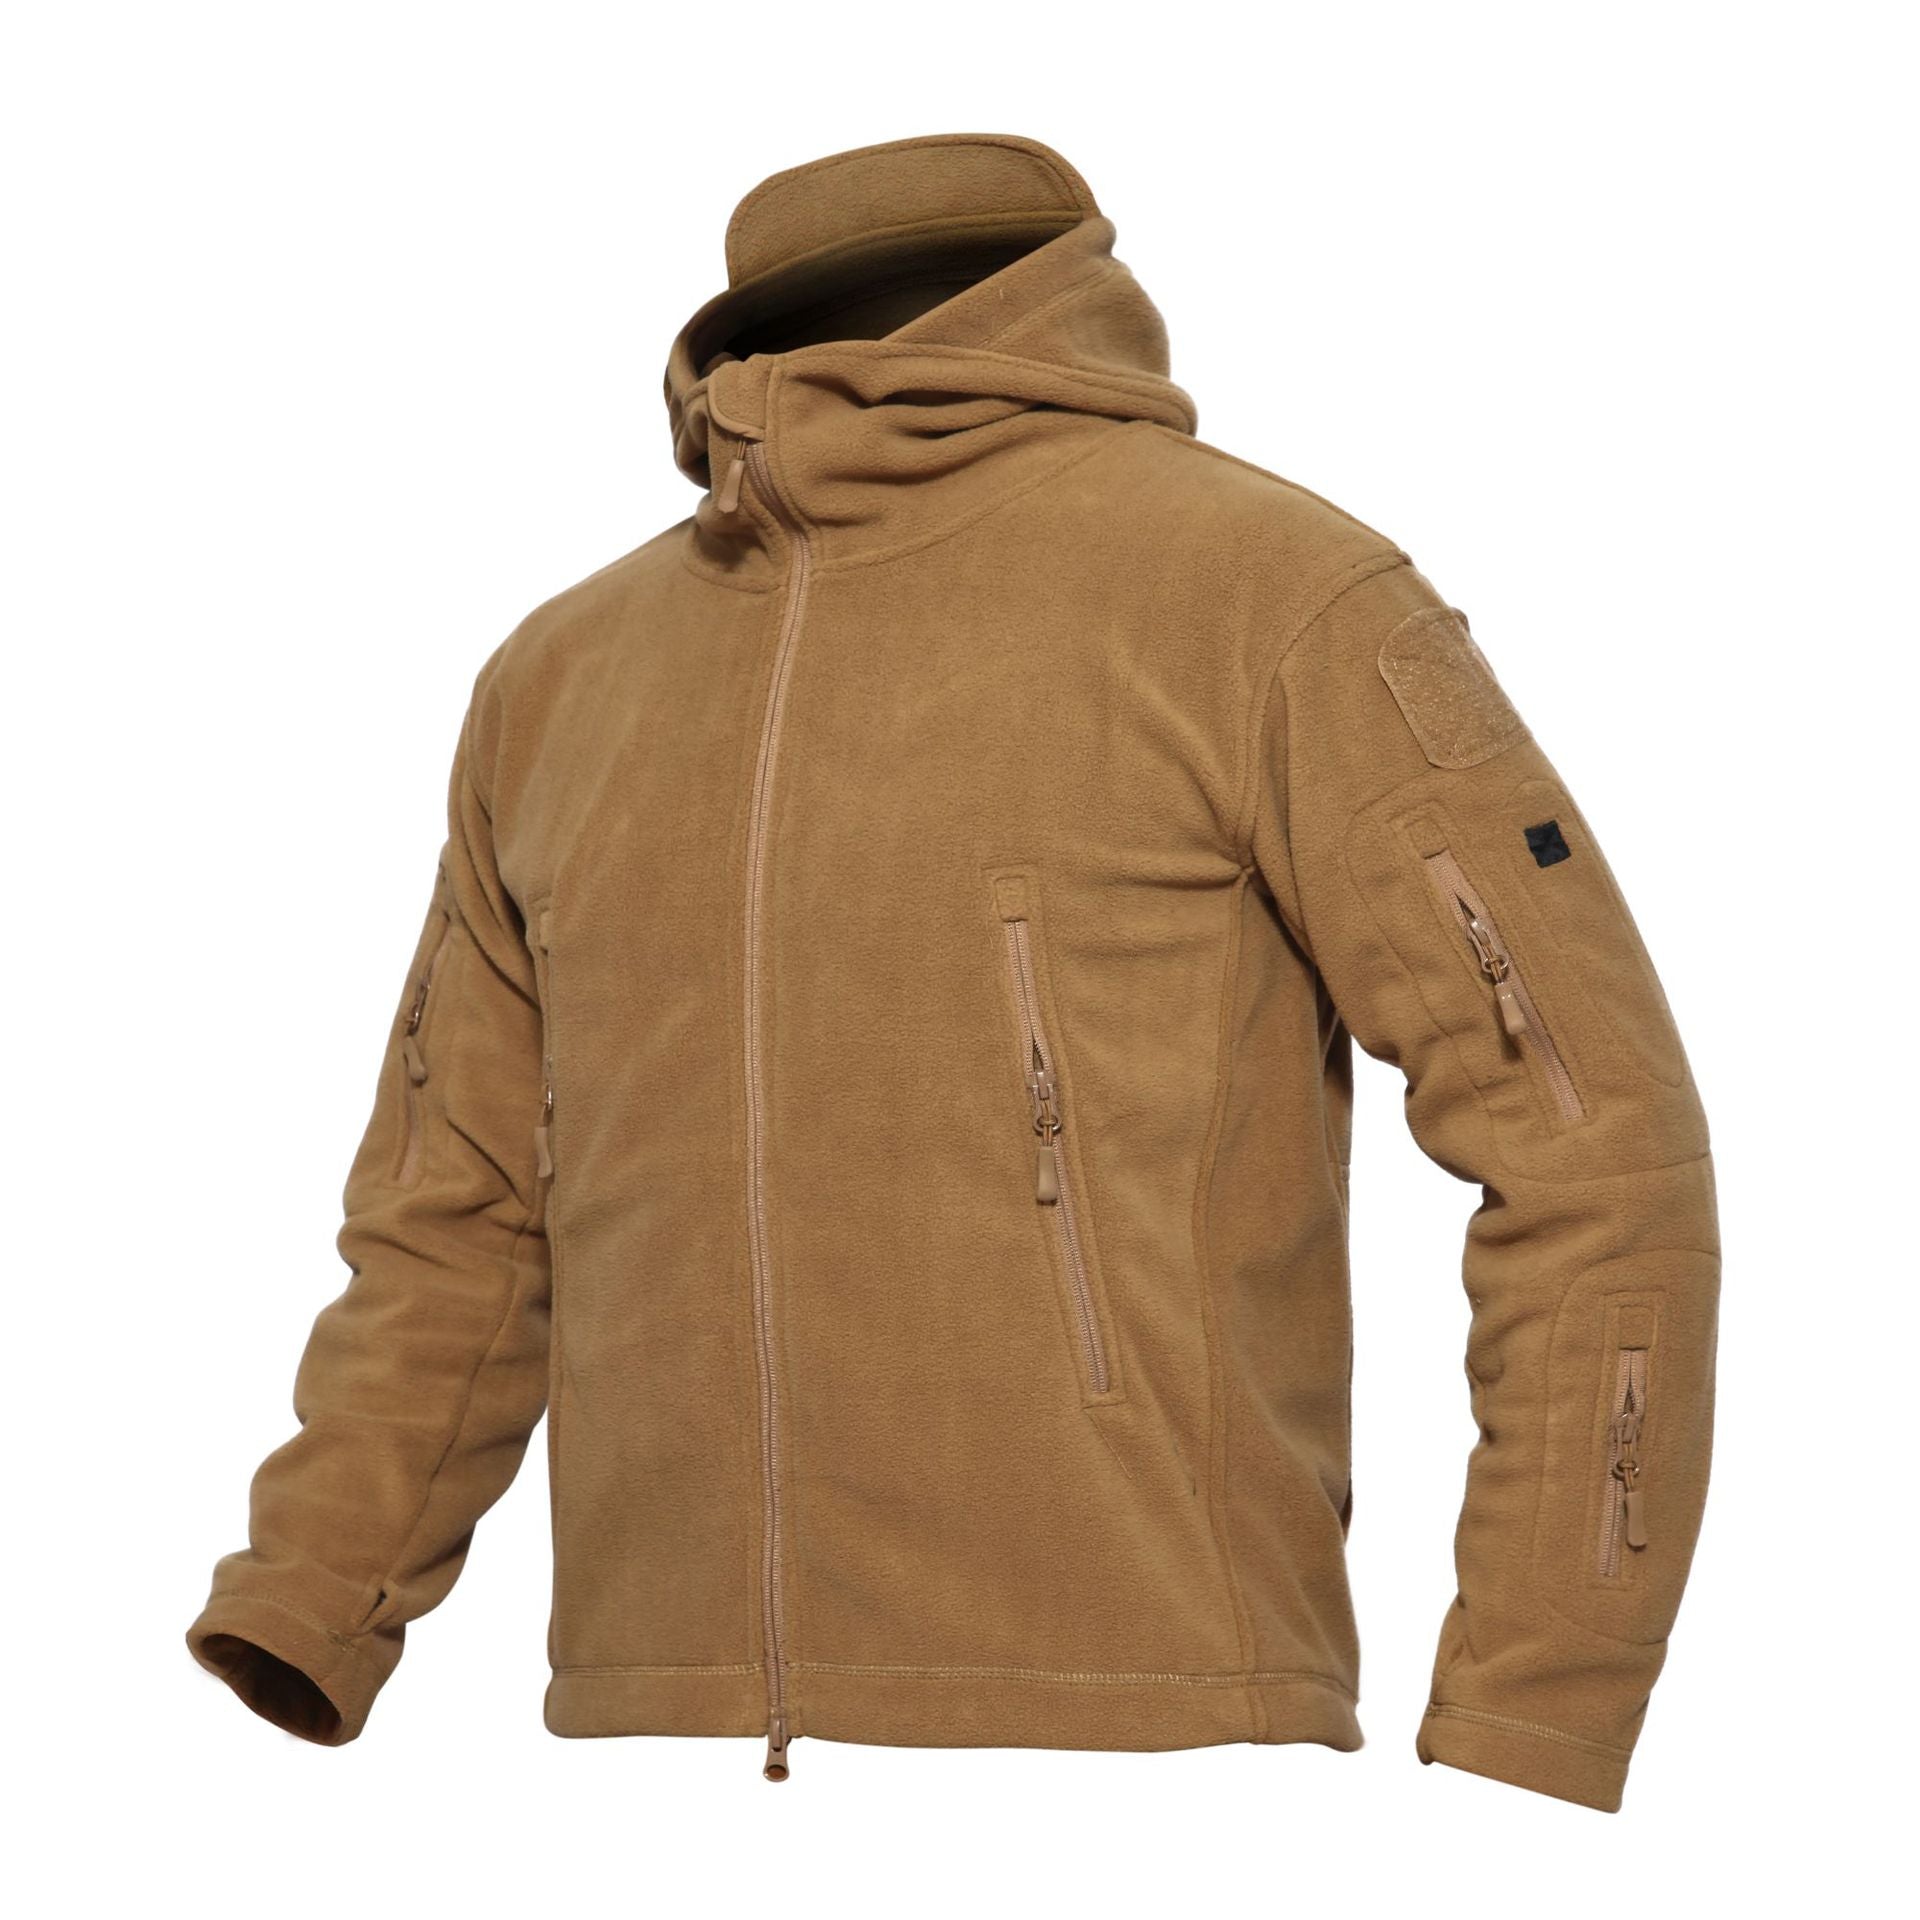 Archon Warm Fleece Hooded Tactical Military Jacket Coat